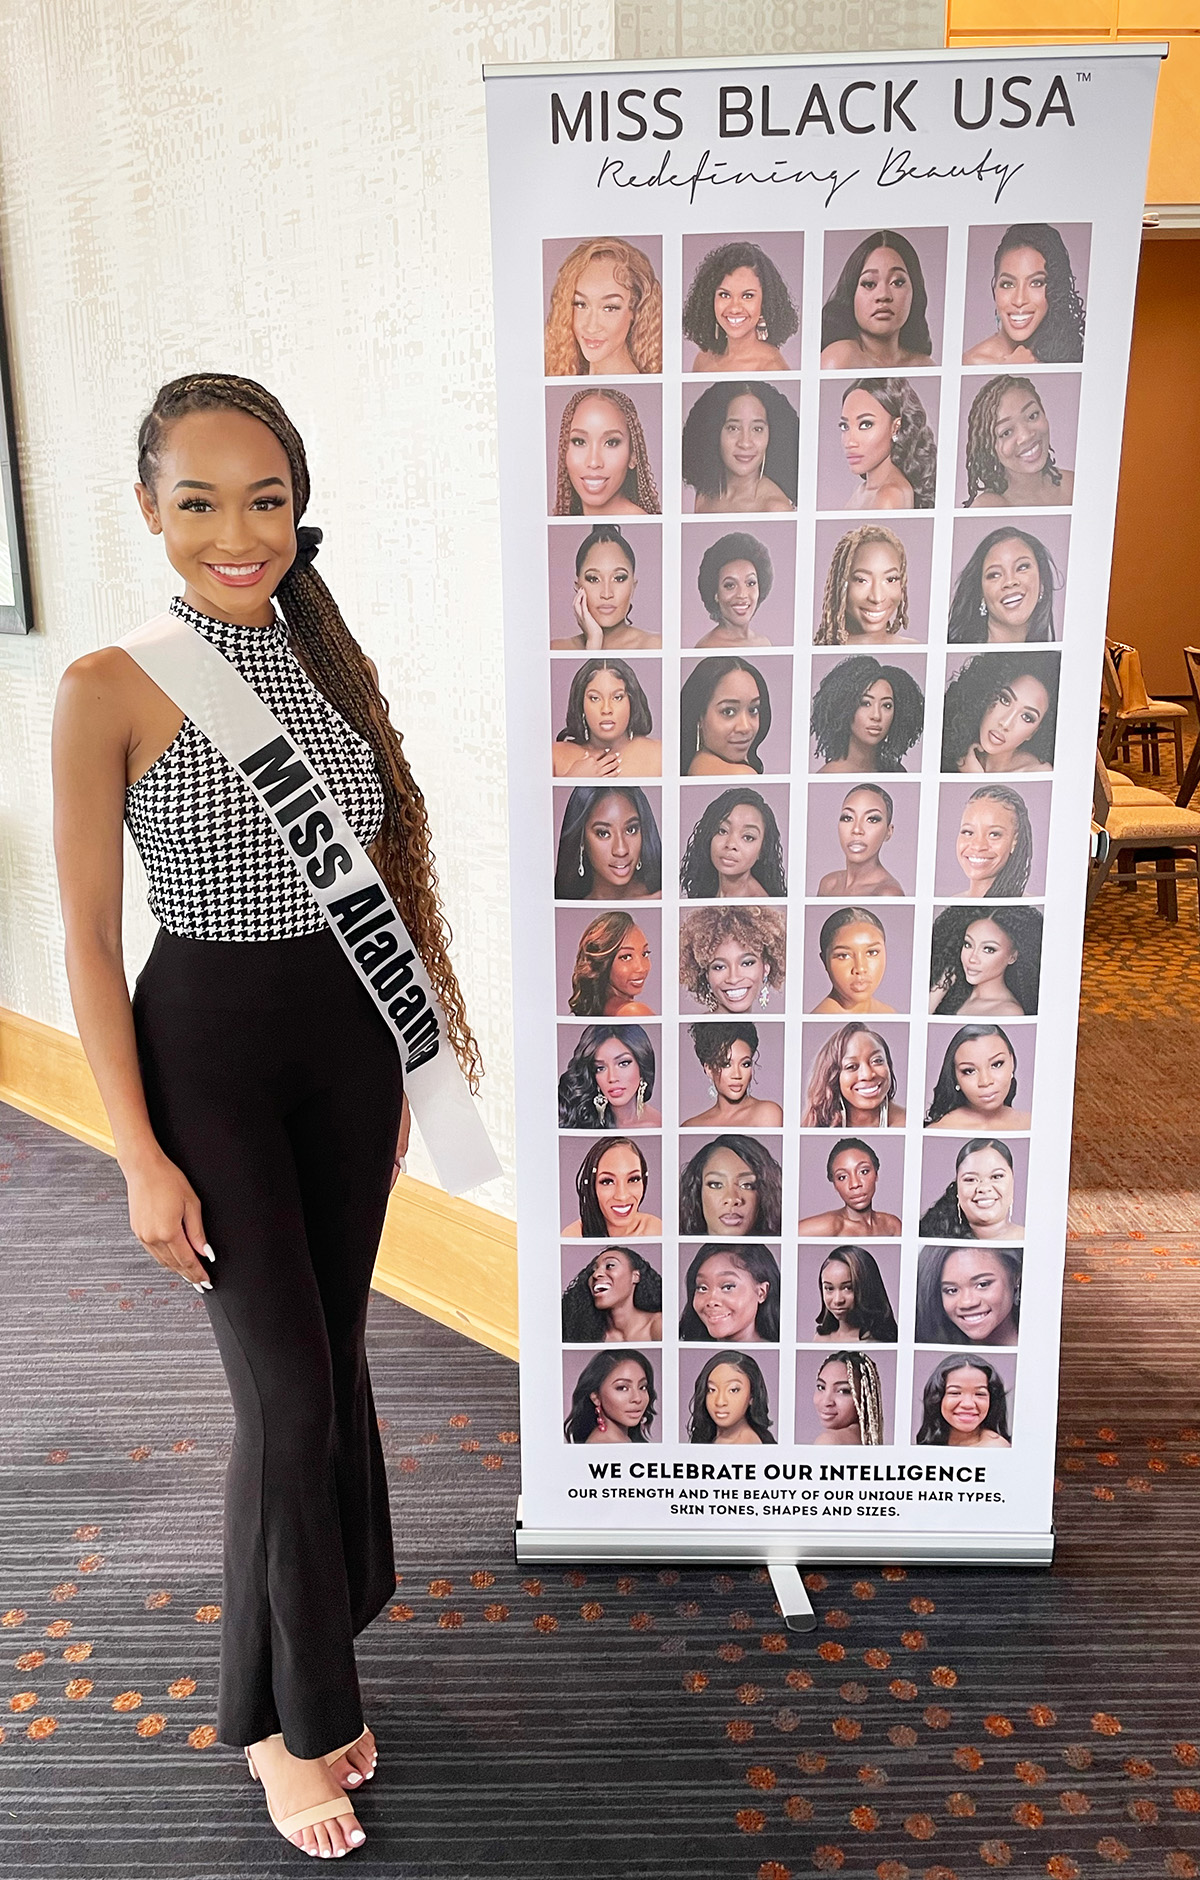 UA Law Student Represents Alabama at Miss Black USA Pageant – University of  Alabama News | The University of Alabama